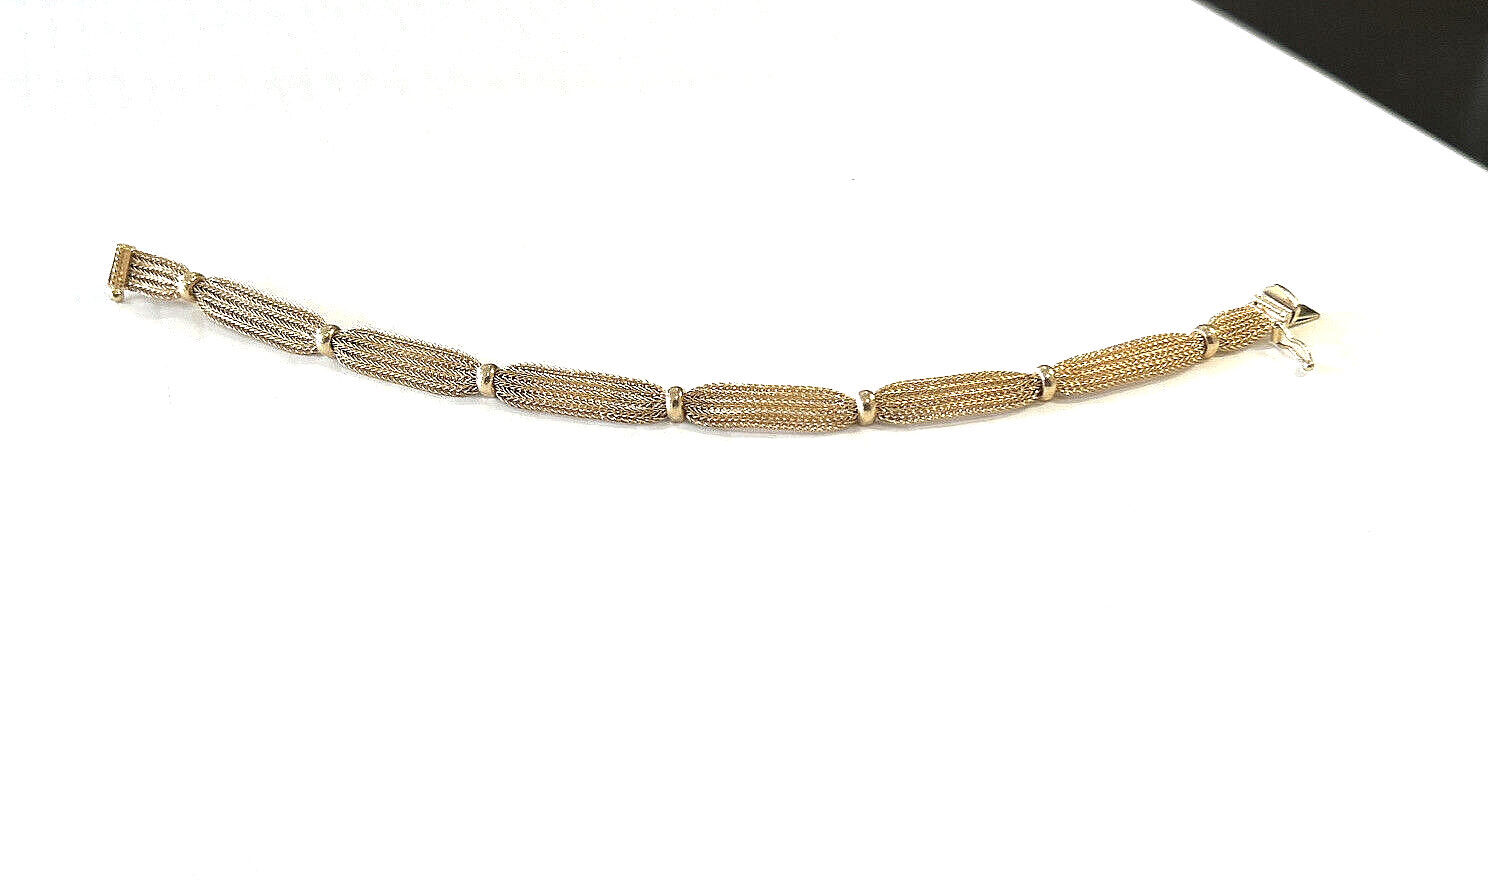 14k Gold Ladies Bracelet w Safety Clasp 7 1/8" - 9.6 Gr - 6.5mm